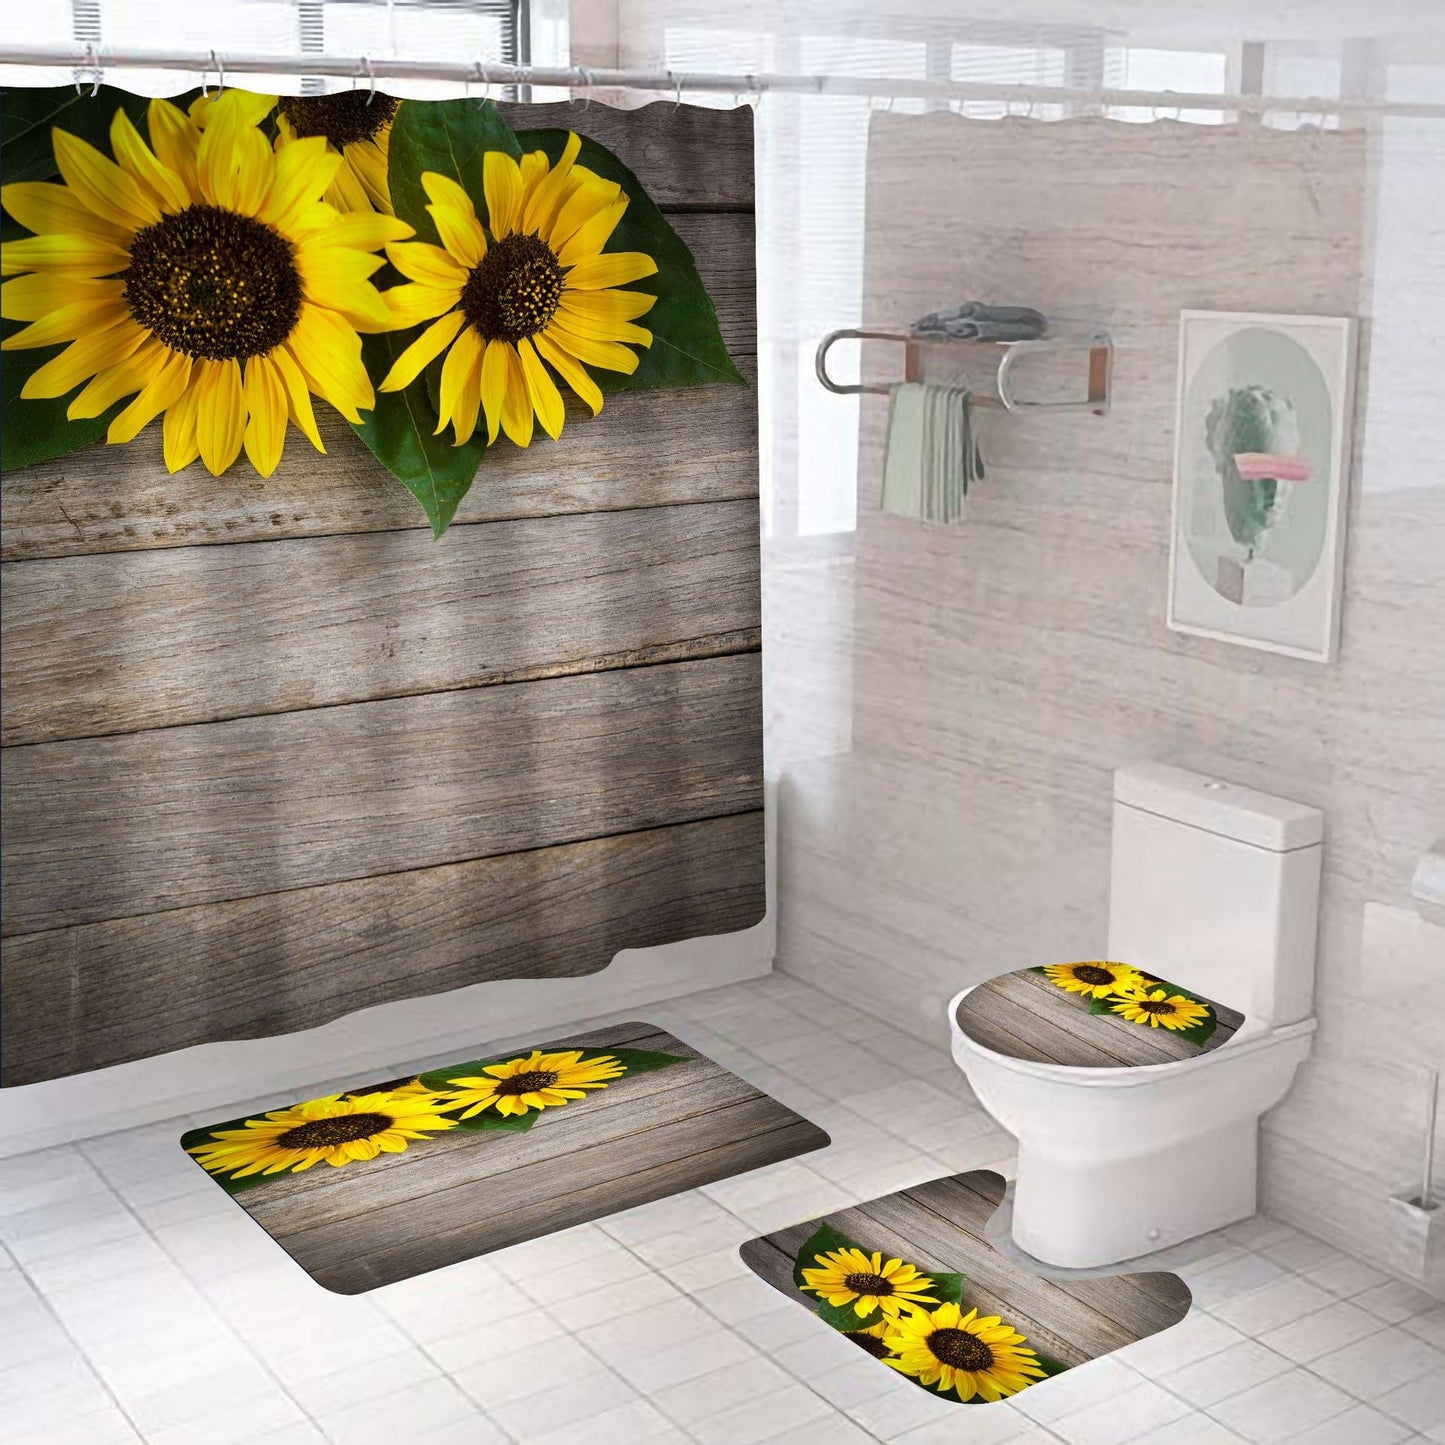 Vintage Sunflowers Shower Curtain Sets Rug & Mat Non-Slip Toilet Lid Cover